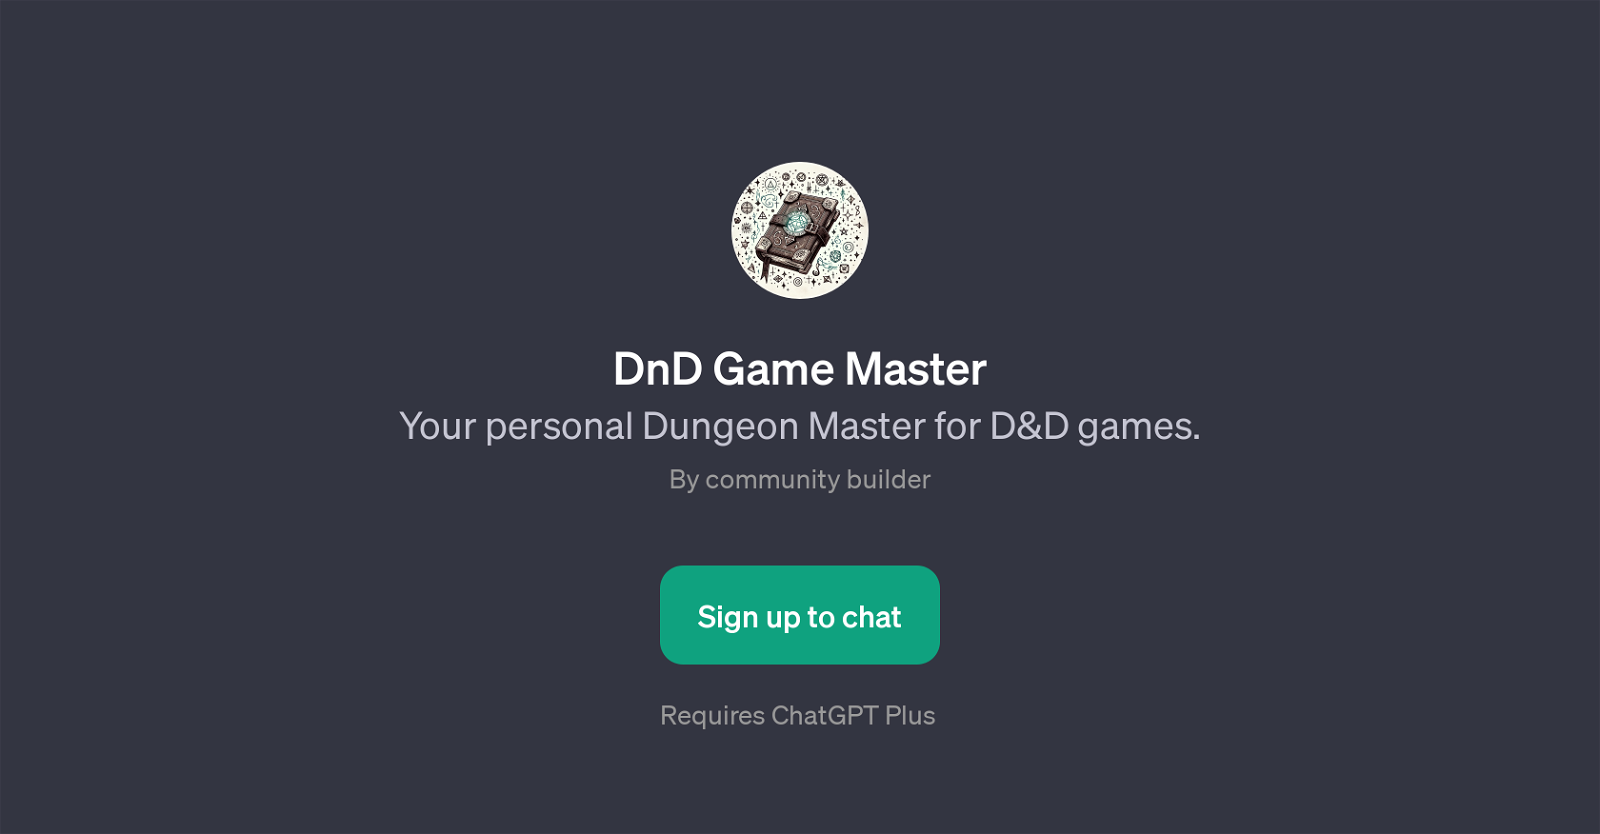 DnD Game Master website